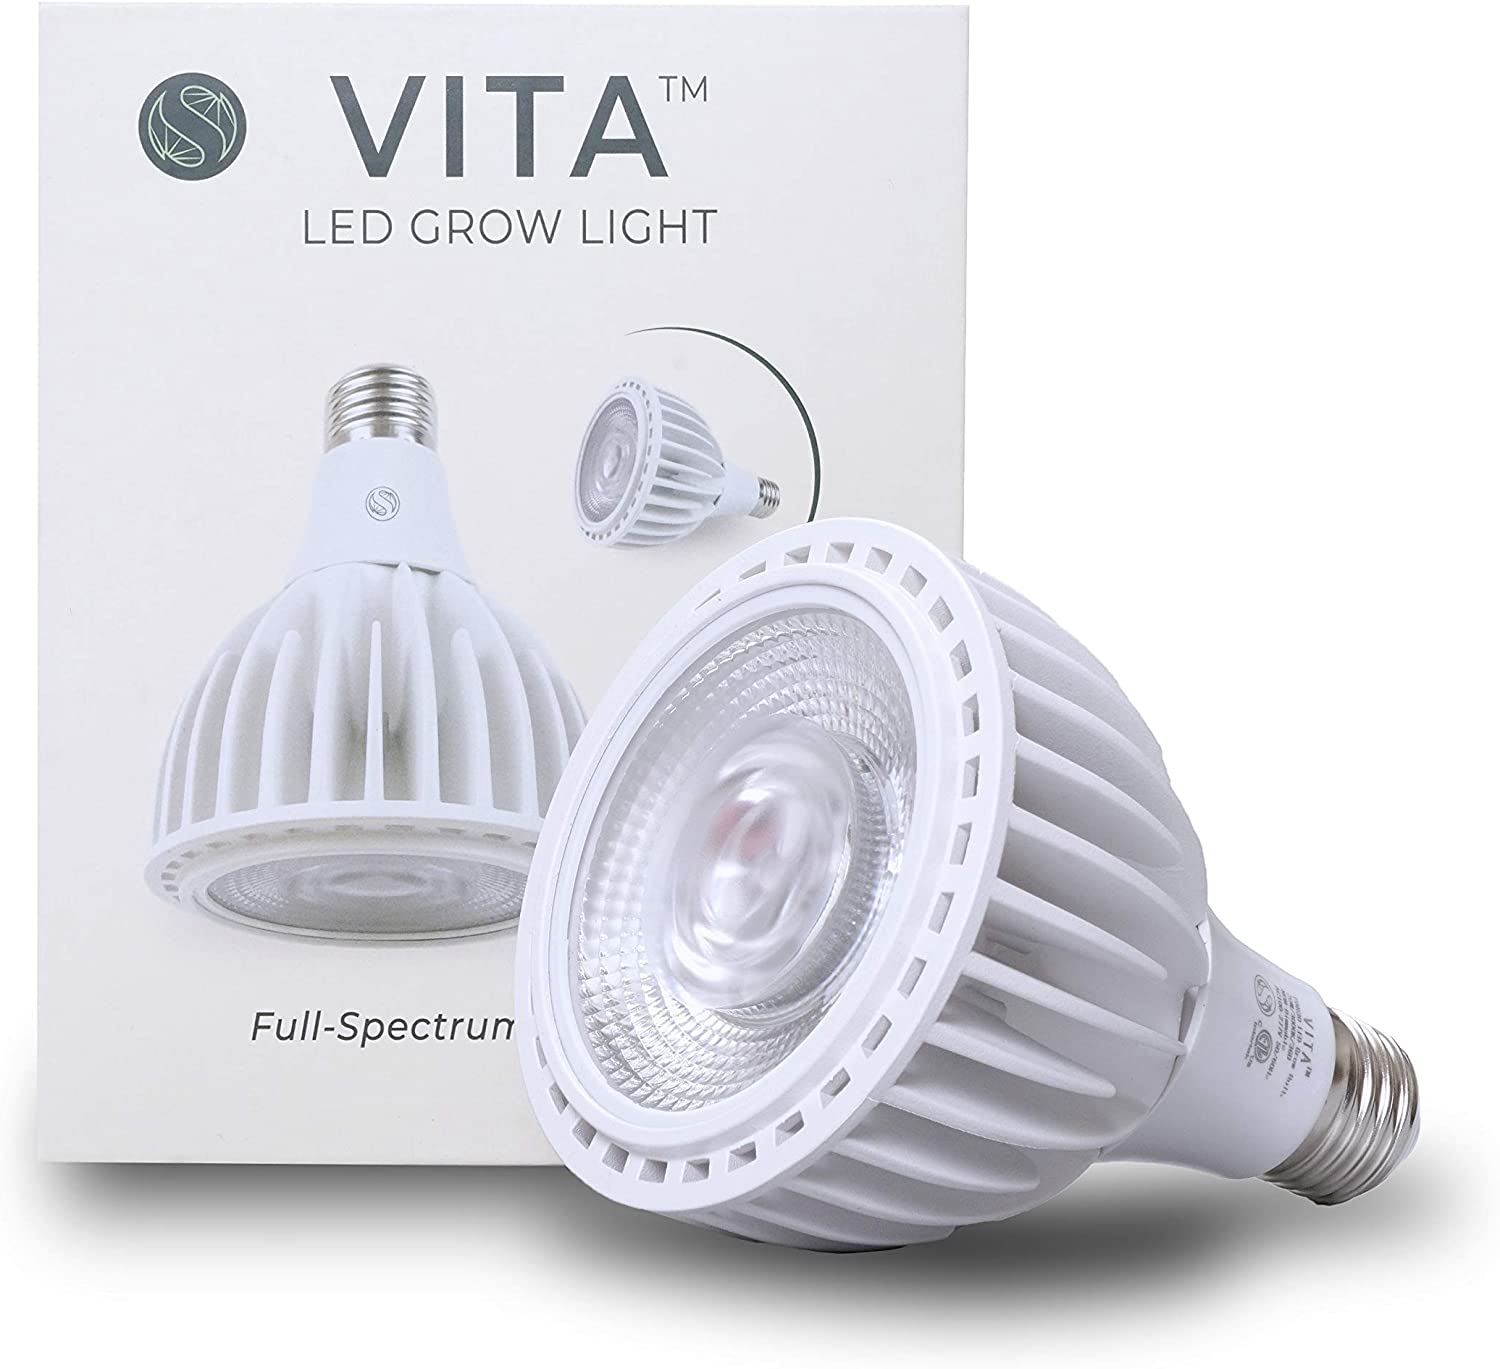 SOL VITA LED GROW LIGHT LAMP WHITE 60 DEG BEAM 20W 1500L 3000K COLOR TEMP PAR30 MEDIUM BASE DIMMABLE